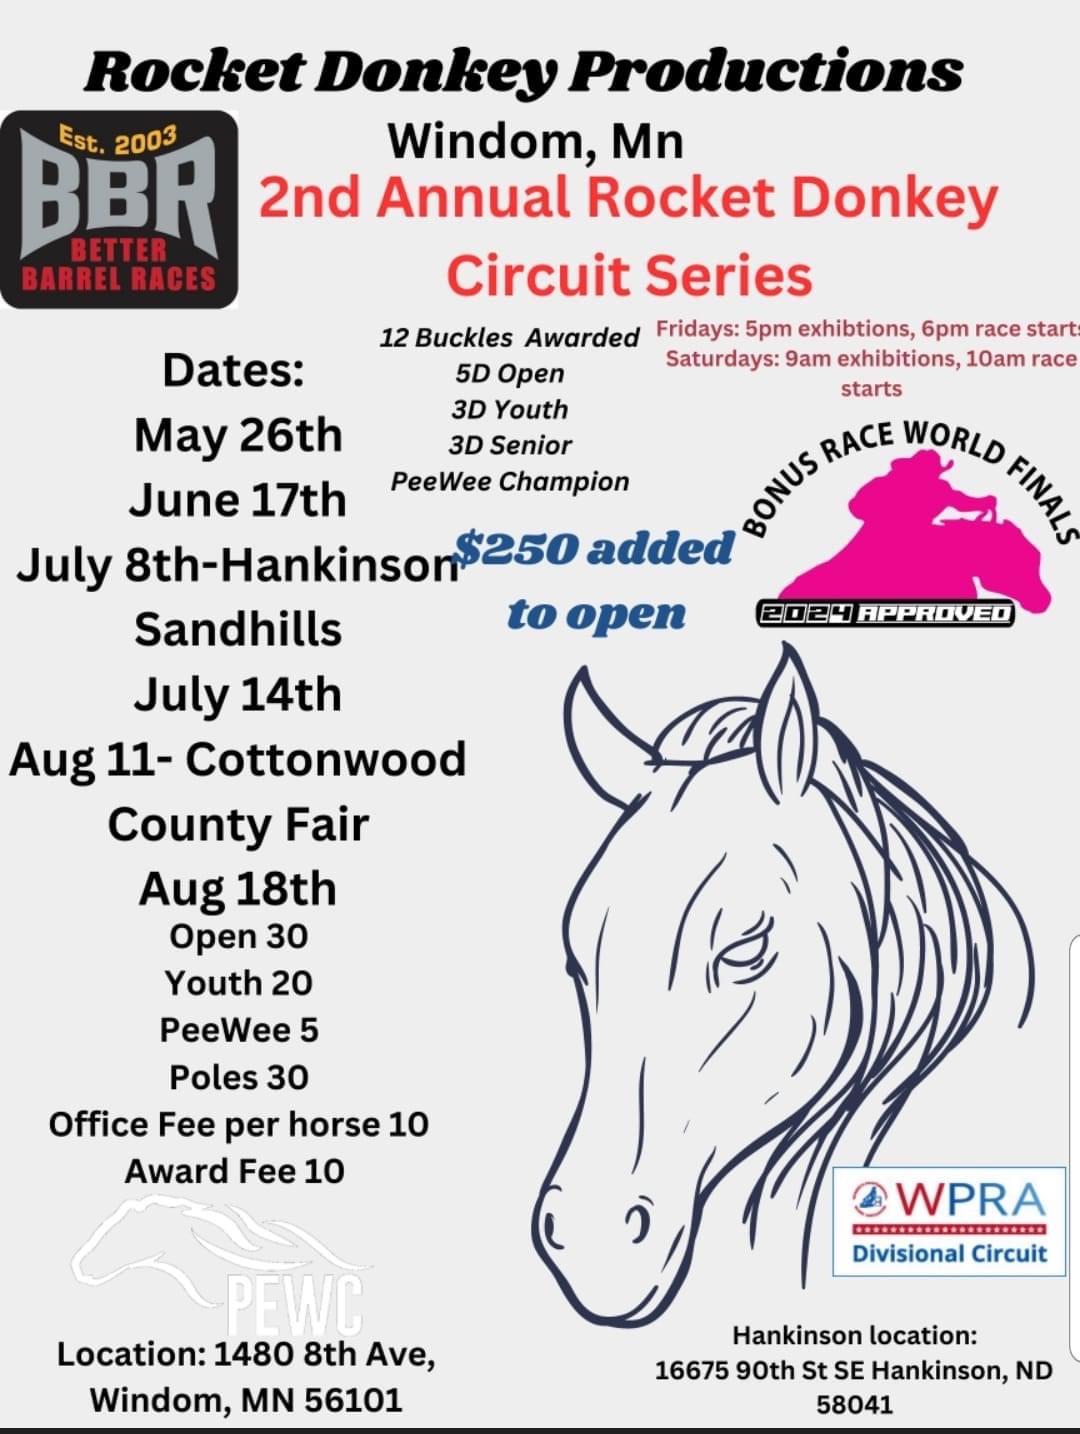 2nd Annual Rocket Donkey Circuit Series